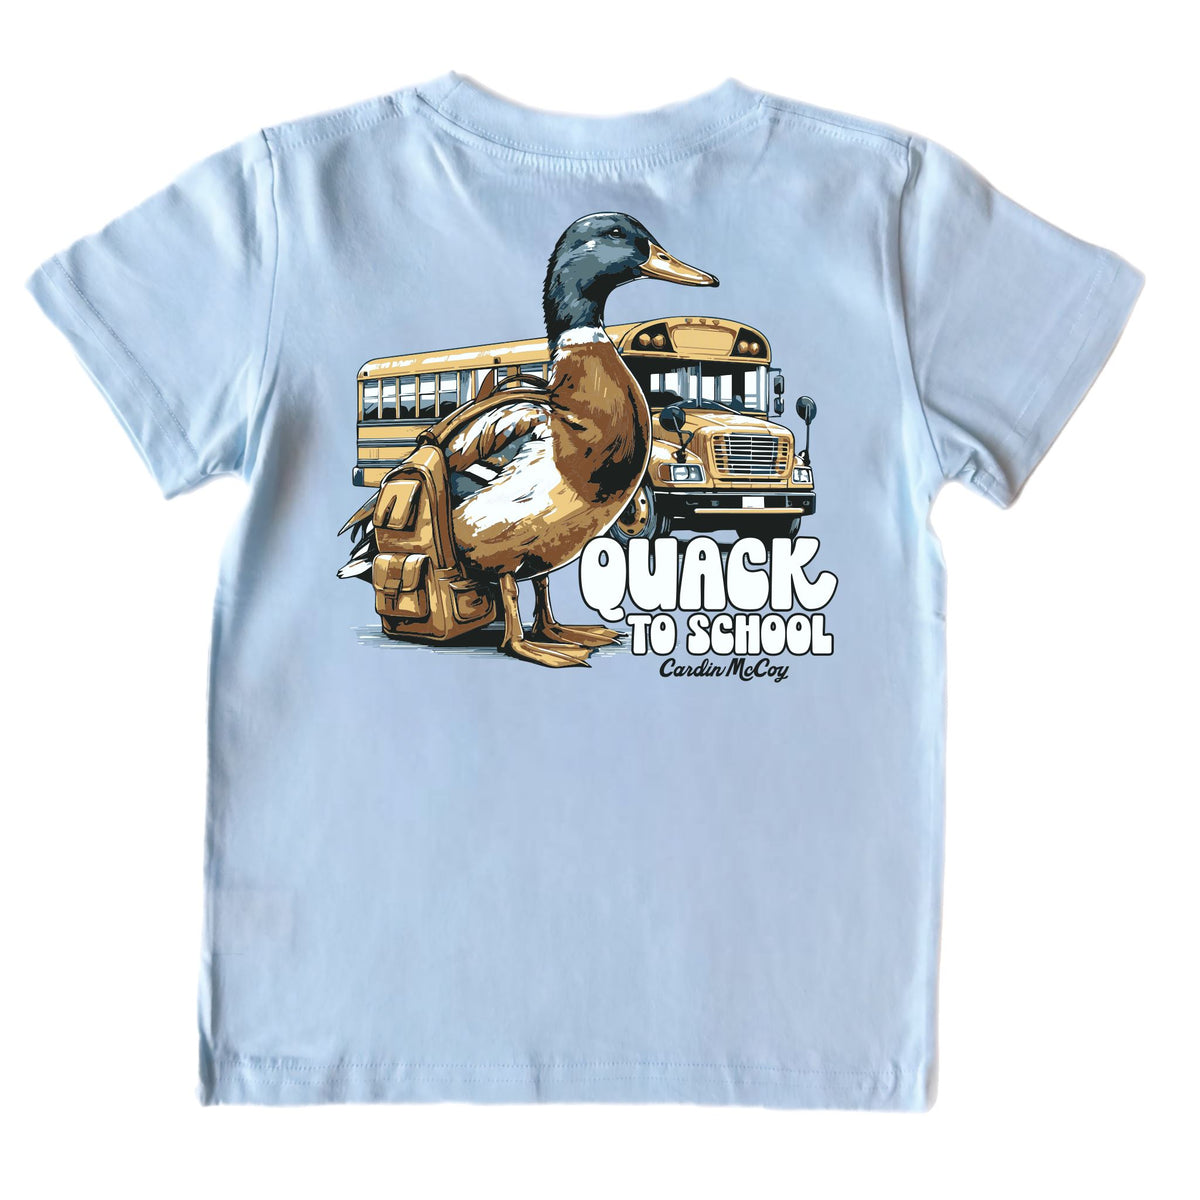 Boys' Quack to School Short-Sleeve Tee Short Sleeve T-Shirt Cardin McCoy Cool Blue XXS (2/3) Pocket